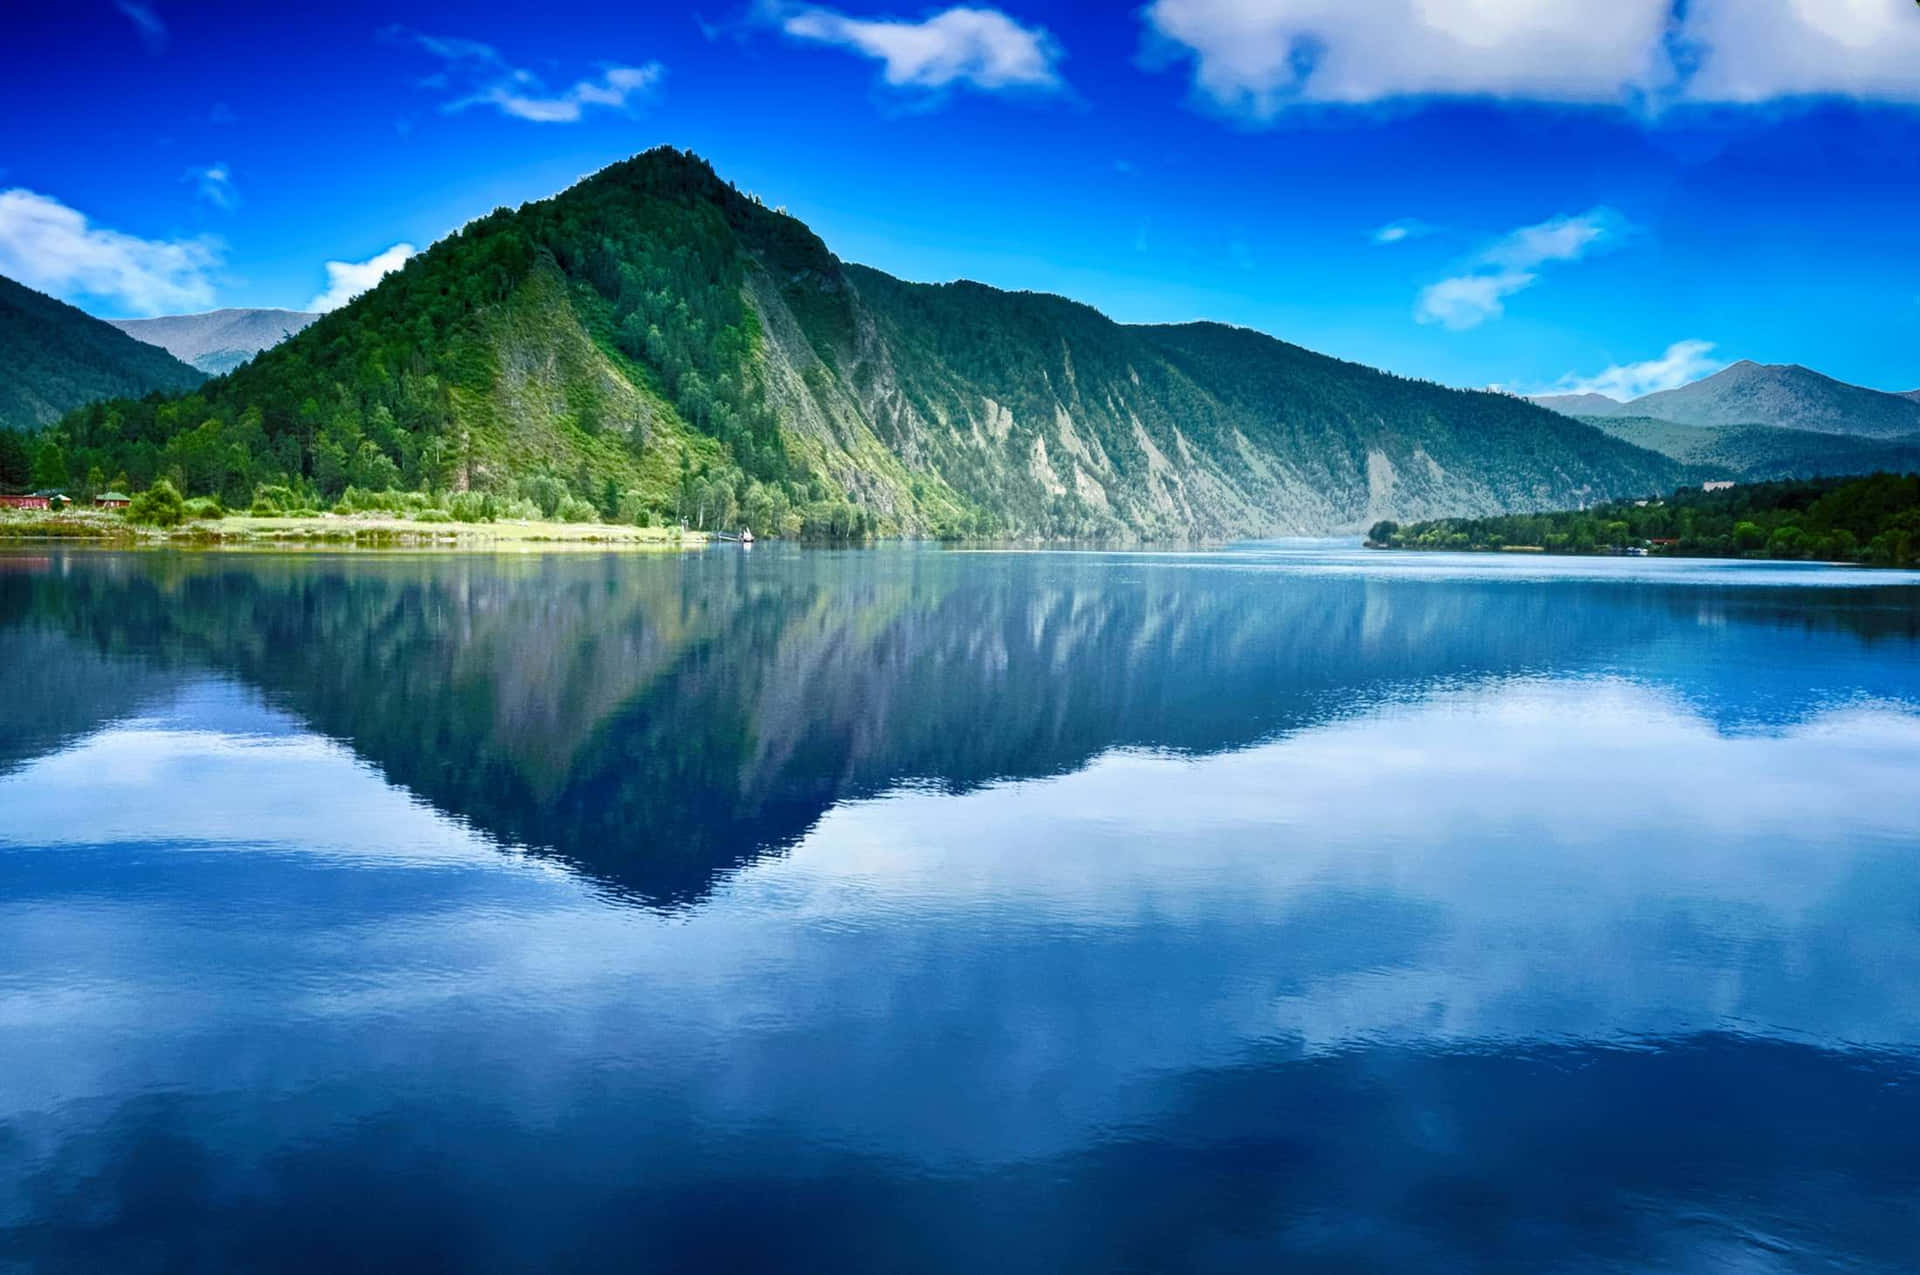 Mountain Reflection On A Majestic Lake Wallpaper